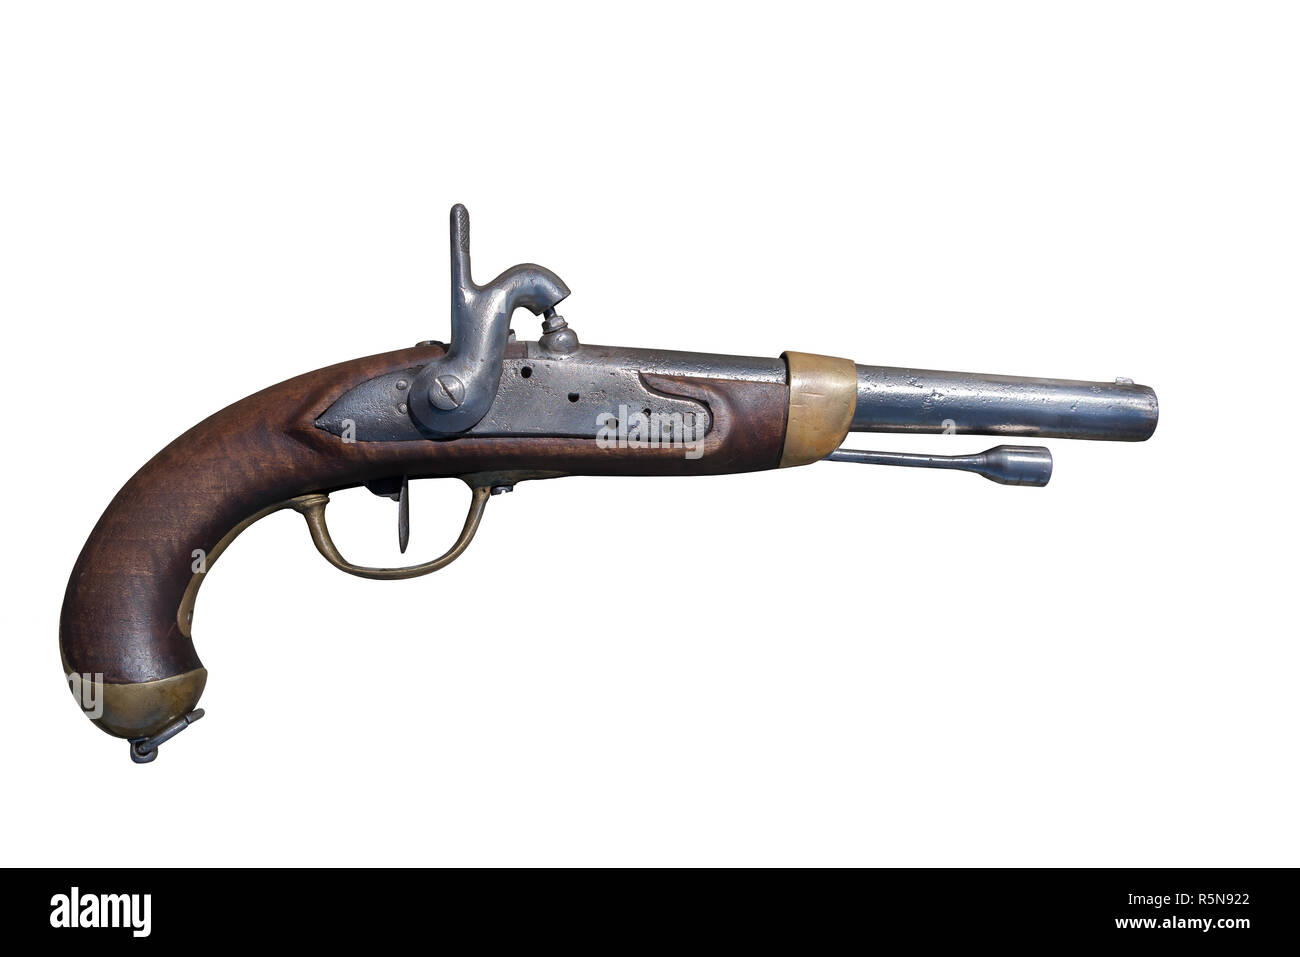 Antique gun pistol Stock Photo